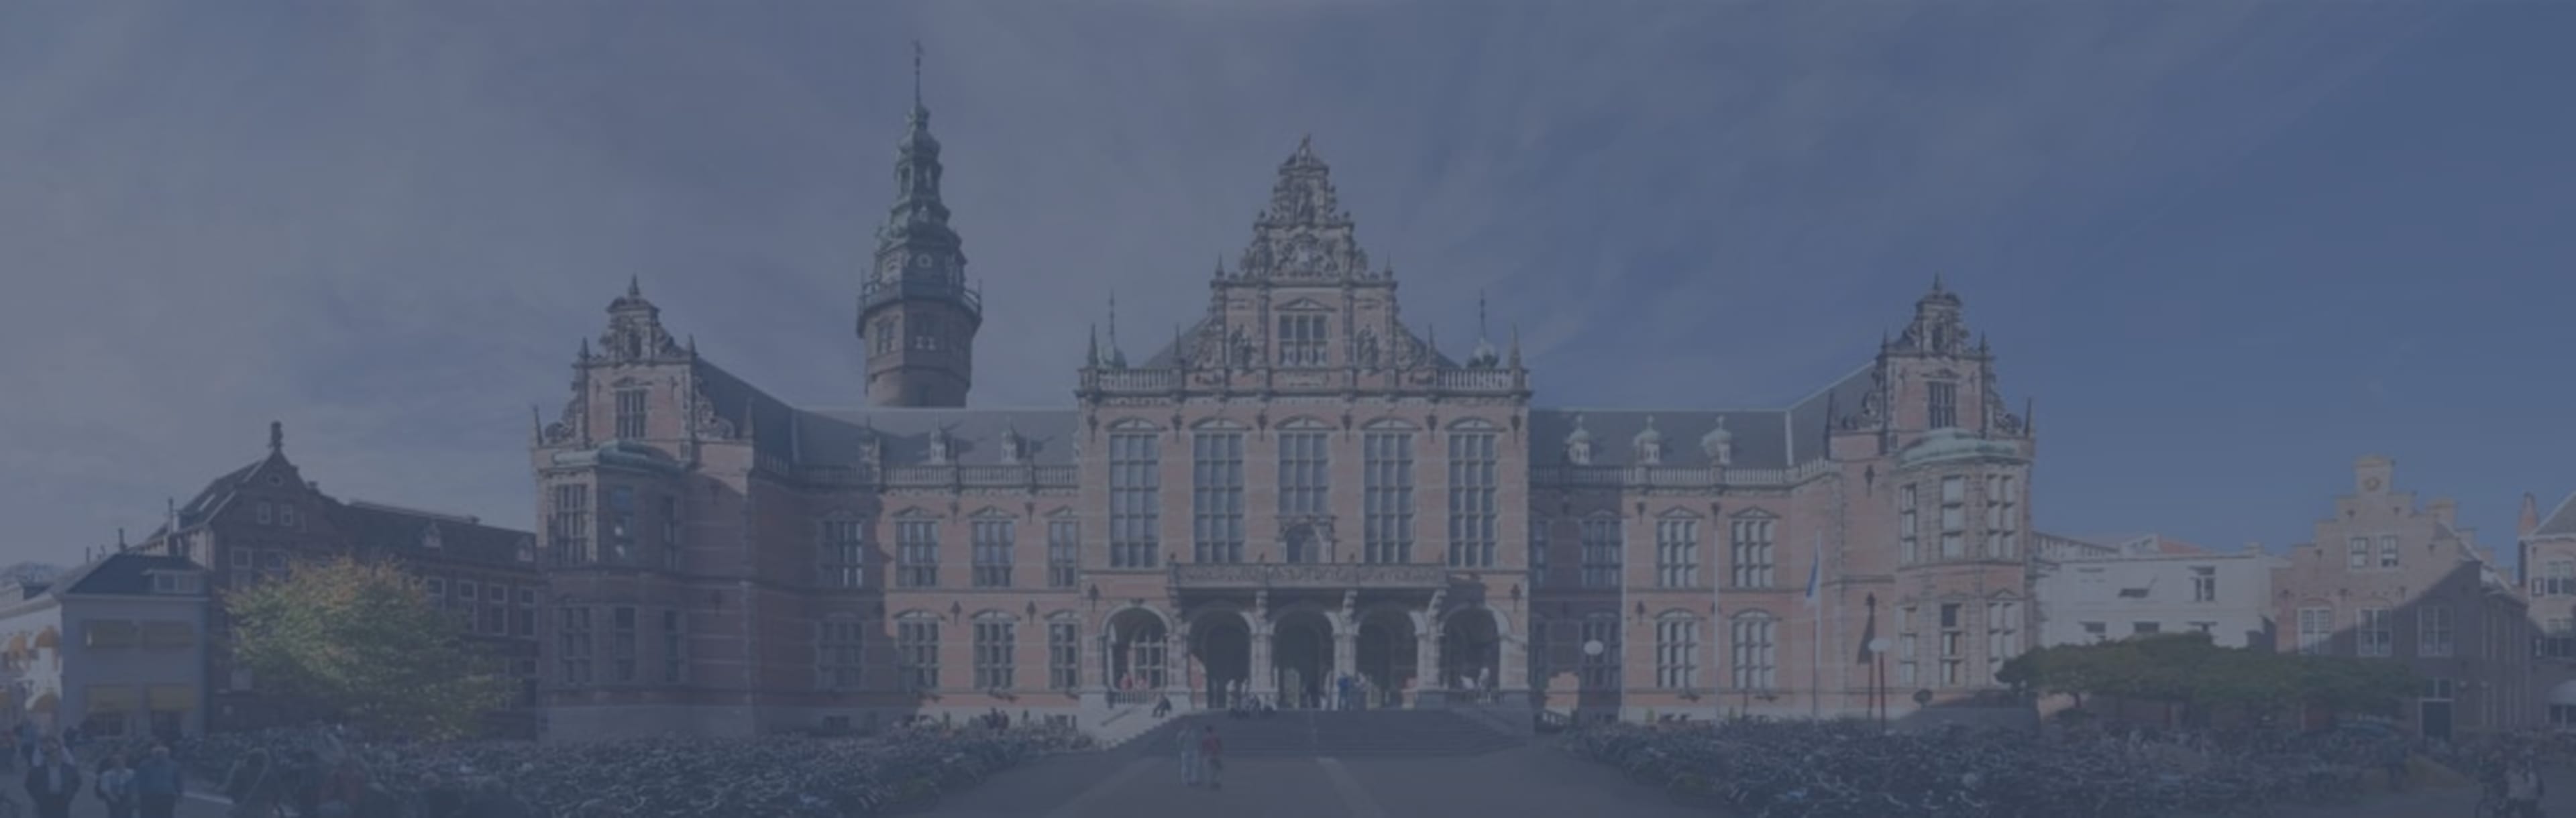 University of Groningen قانون التكنولوجيا LLM والابتكار